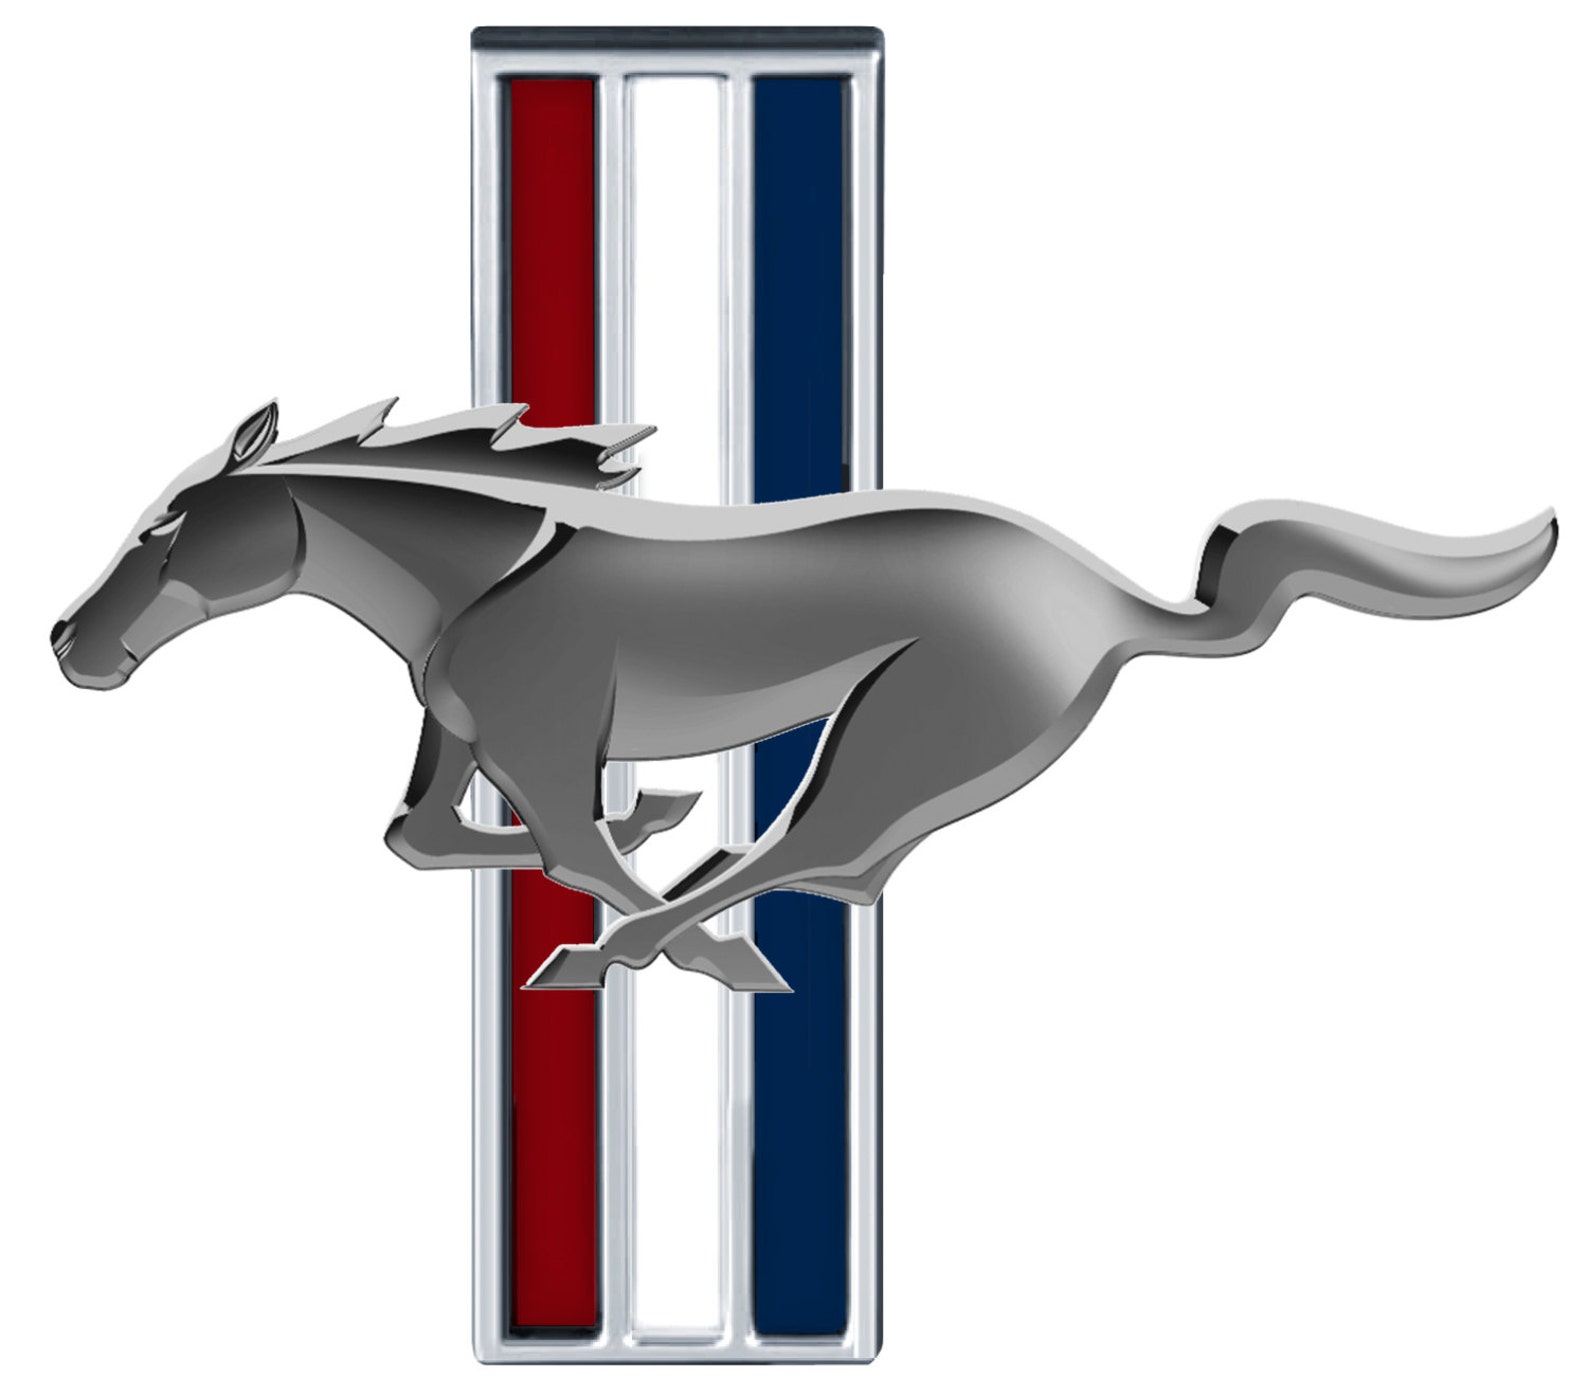 Машина с лошадью на эмблеме. Ford Mustang Emblem. Mustang logo. Машина с эмблемой лошади. Авто с лошадью на эмблеме марка.